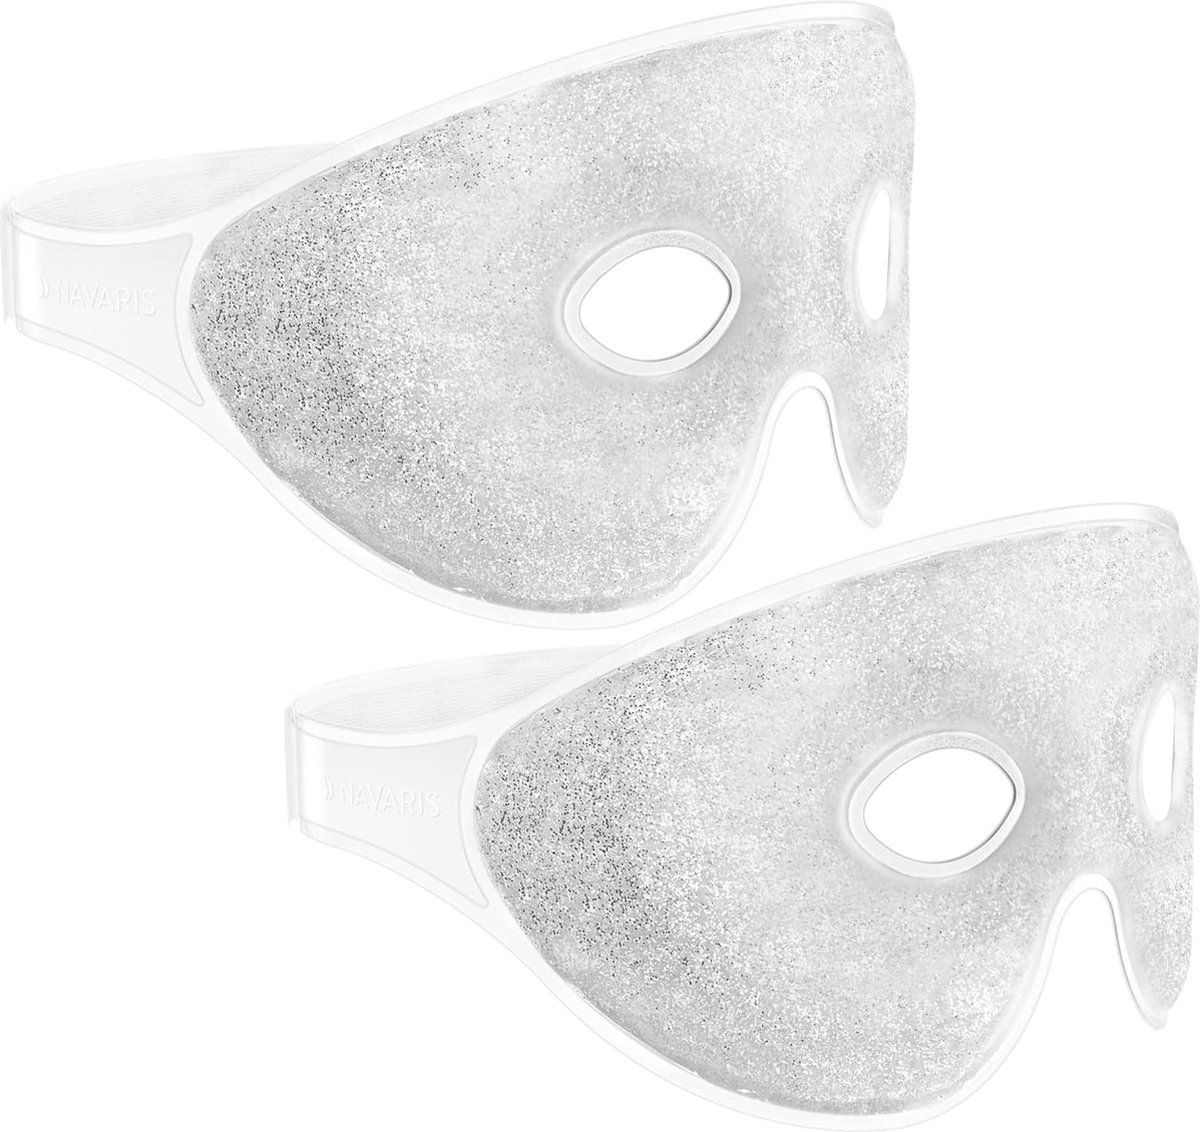 Kleyn - Ijsmasker - Ice Mask - Oogmasker Wallen - Oogmasker Koud - Gelmasker - 2 Stuks - Zilver